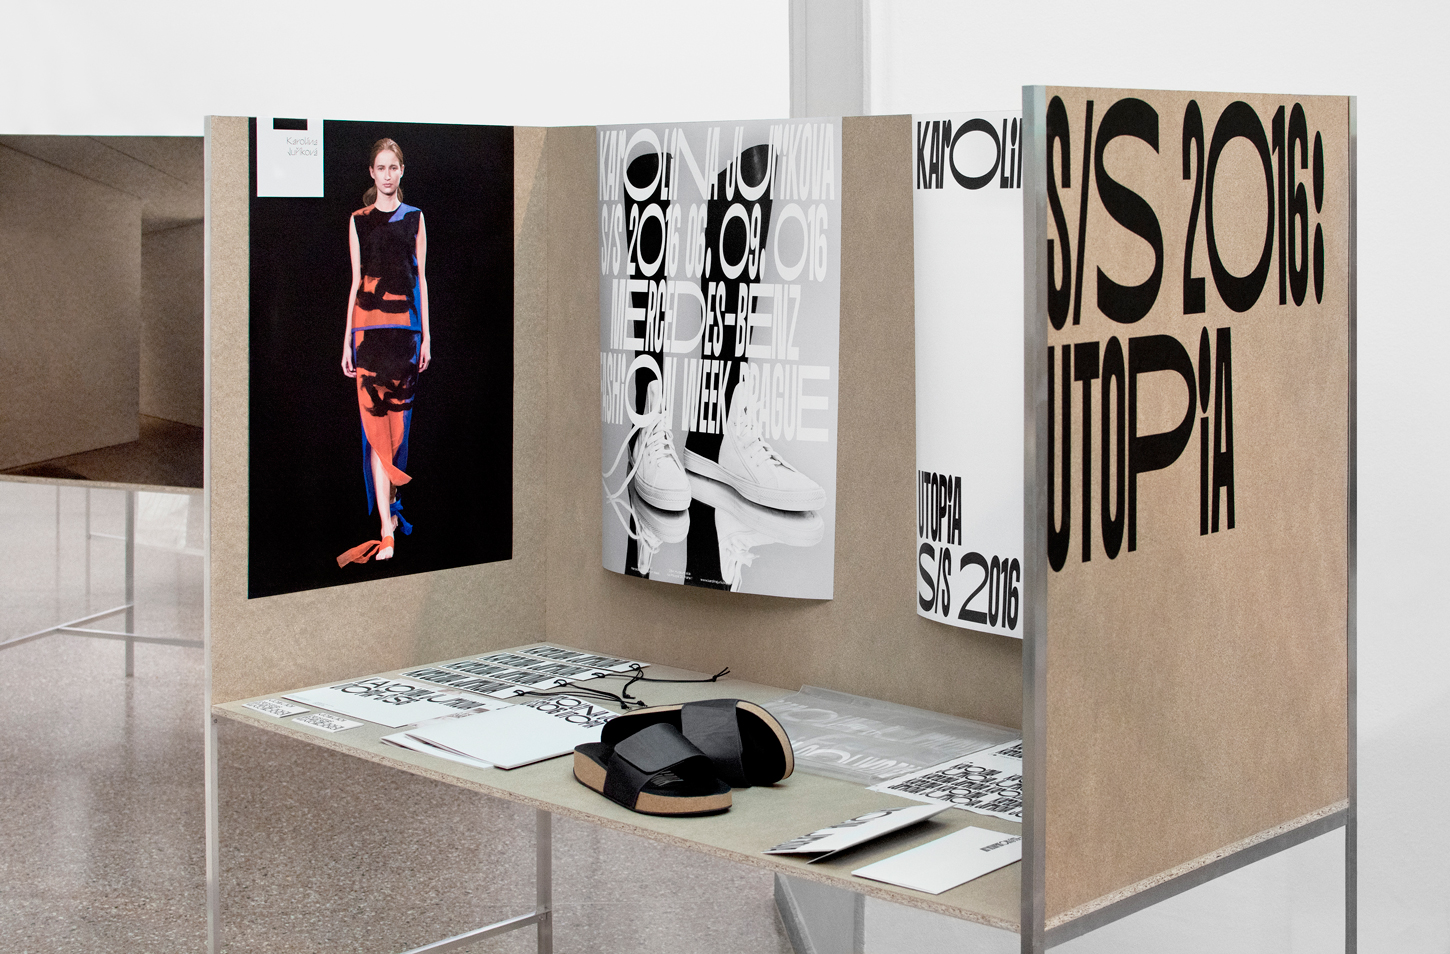 27th Biennial of Graphic Design Brno